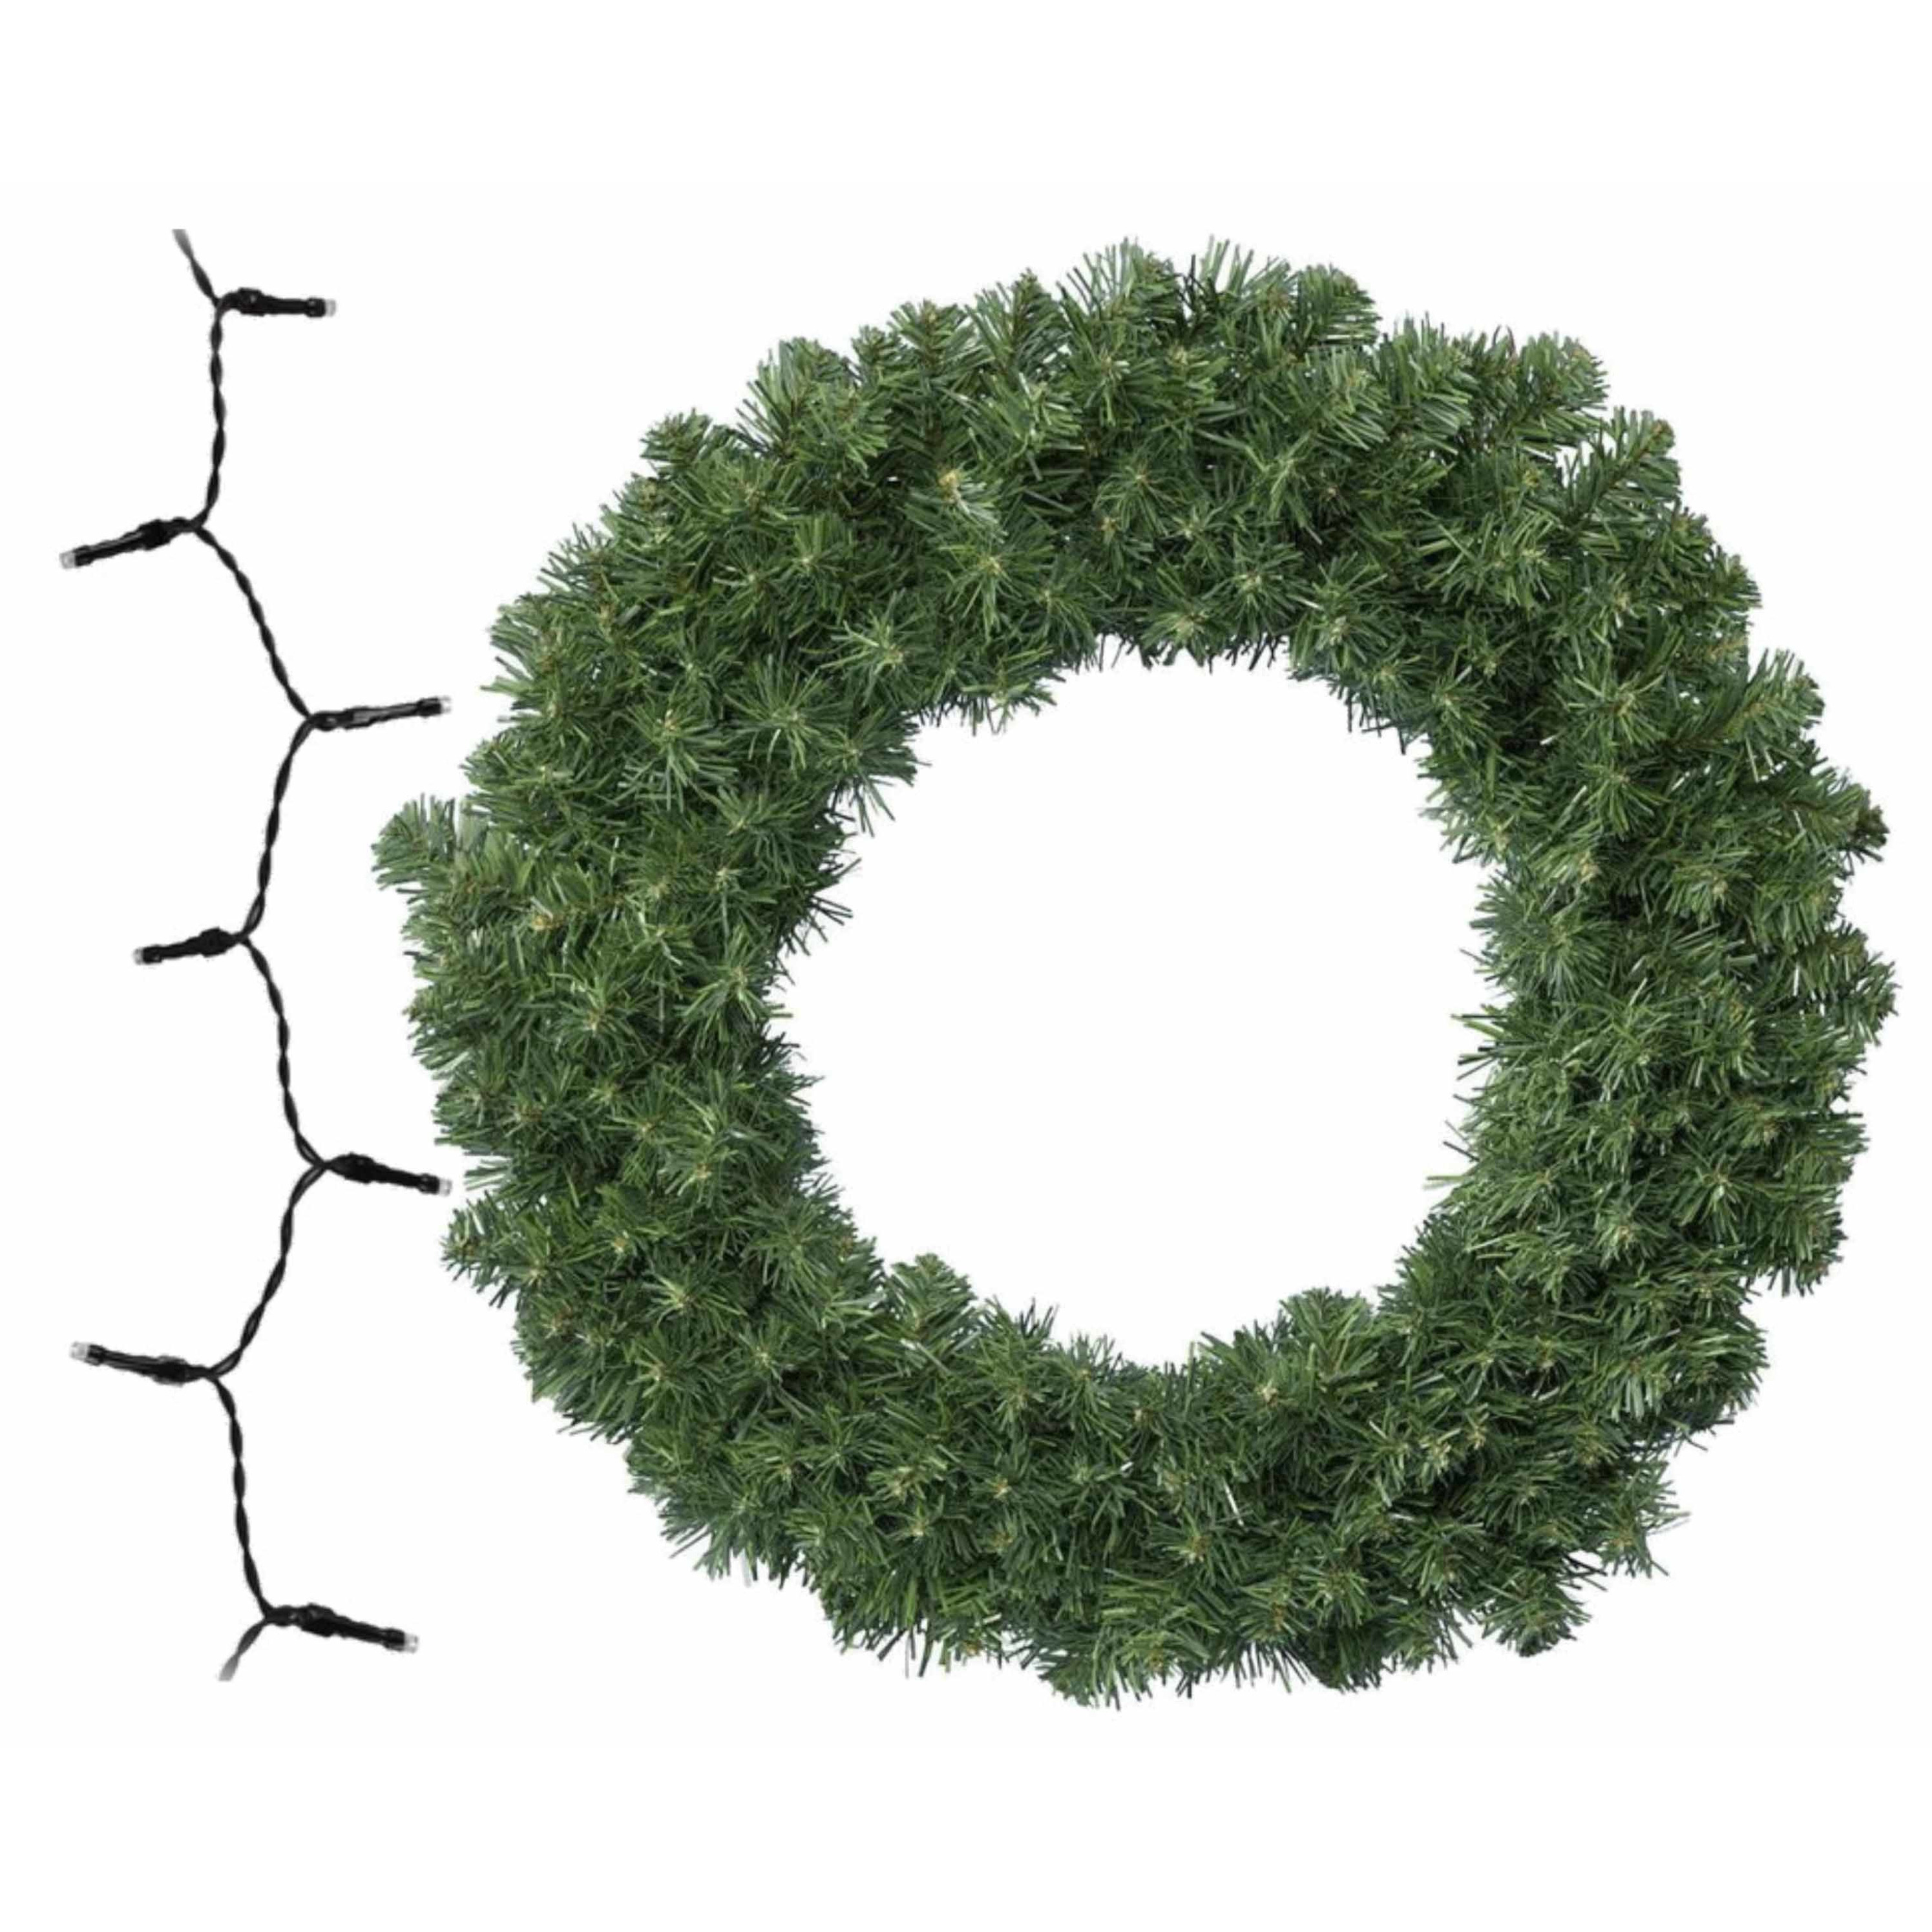 Groene kerstkrans/dennenkrans/deurkrans 50 cm inclusief warm witte verlichting